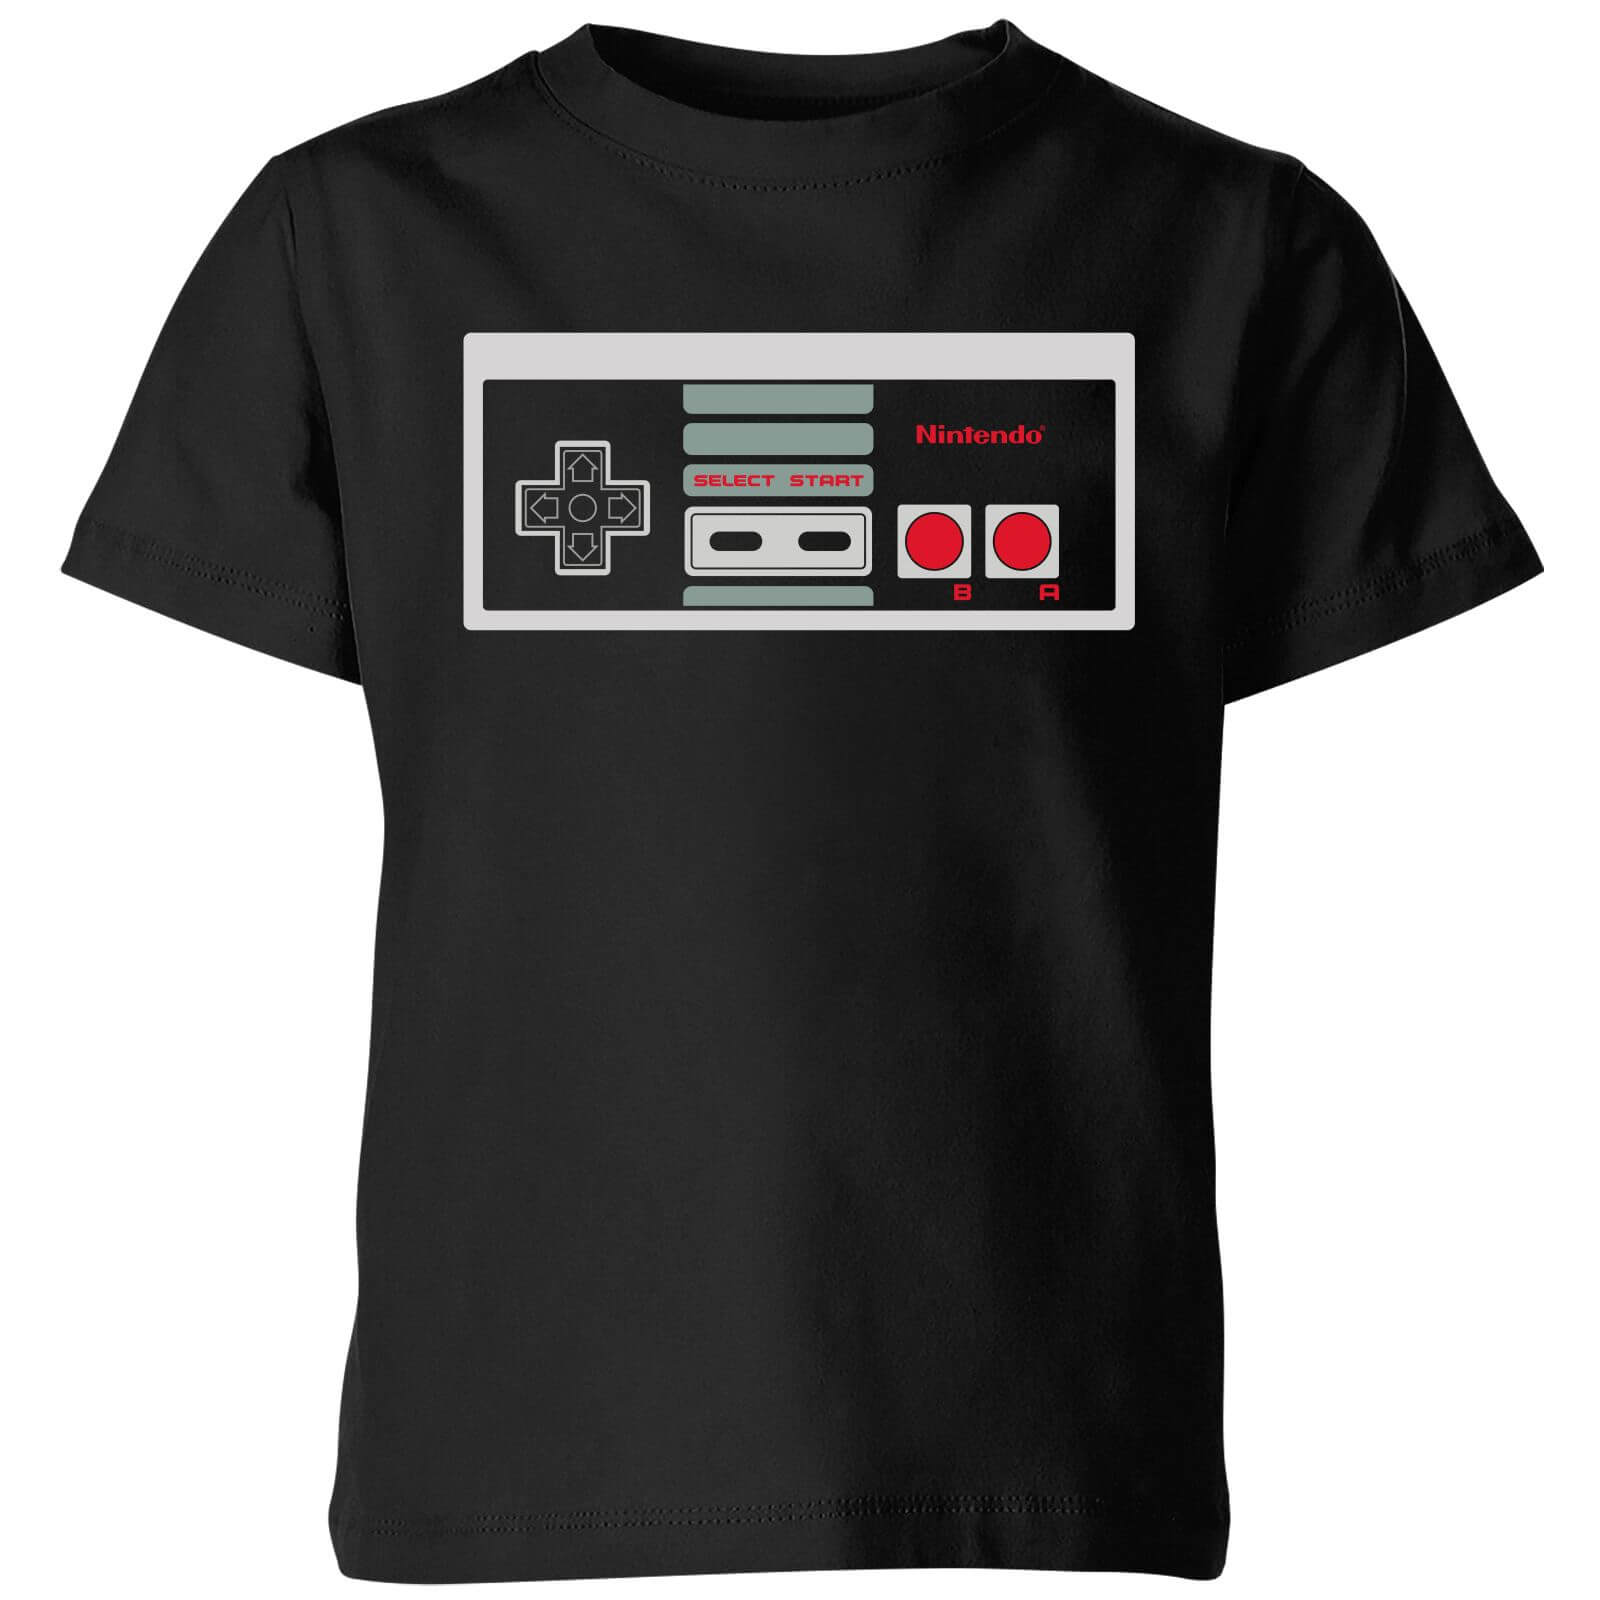 Nintendo NES Controller Chest Kids' T-Shirt - Black - 7-8 Years